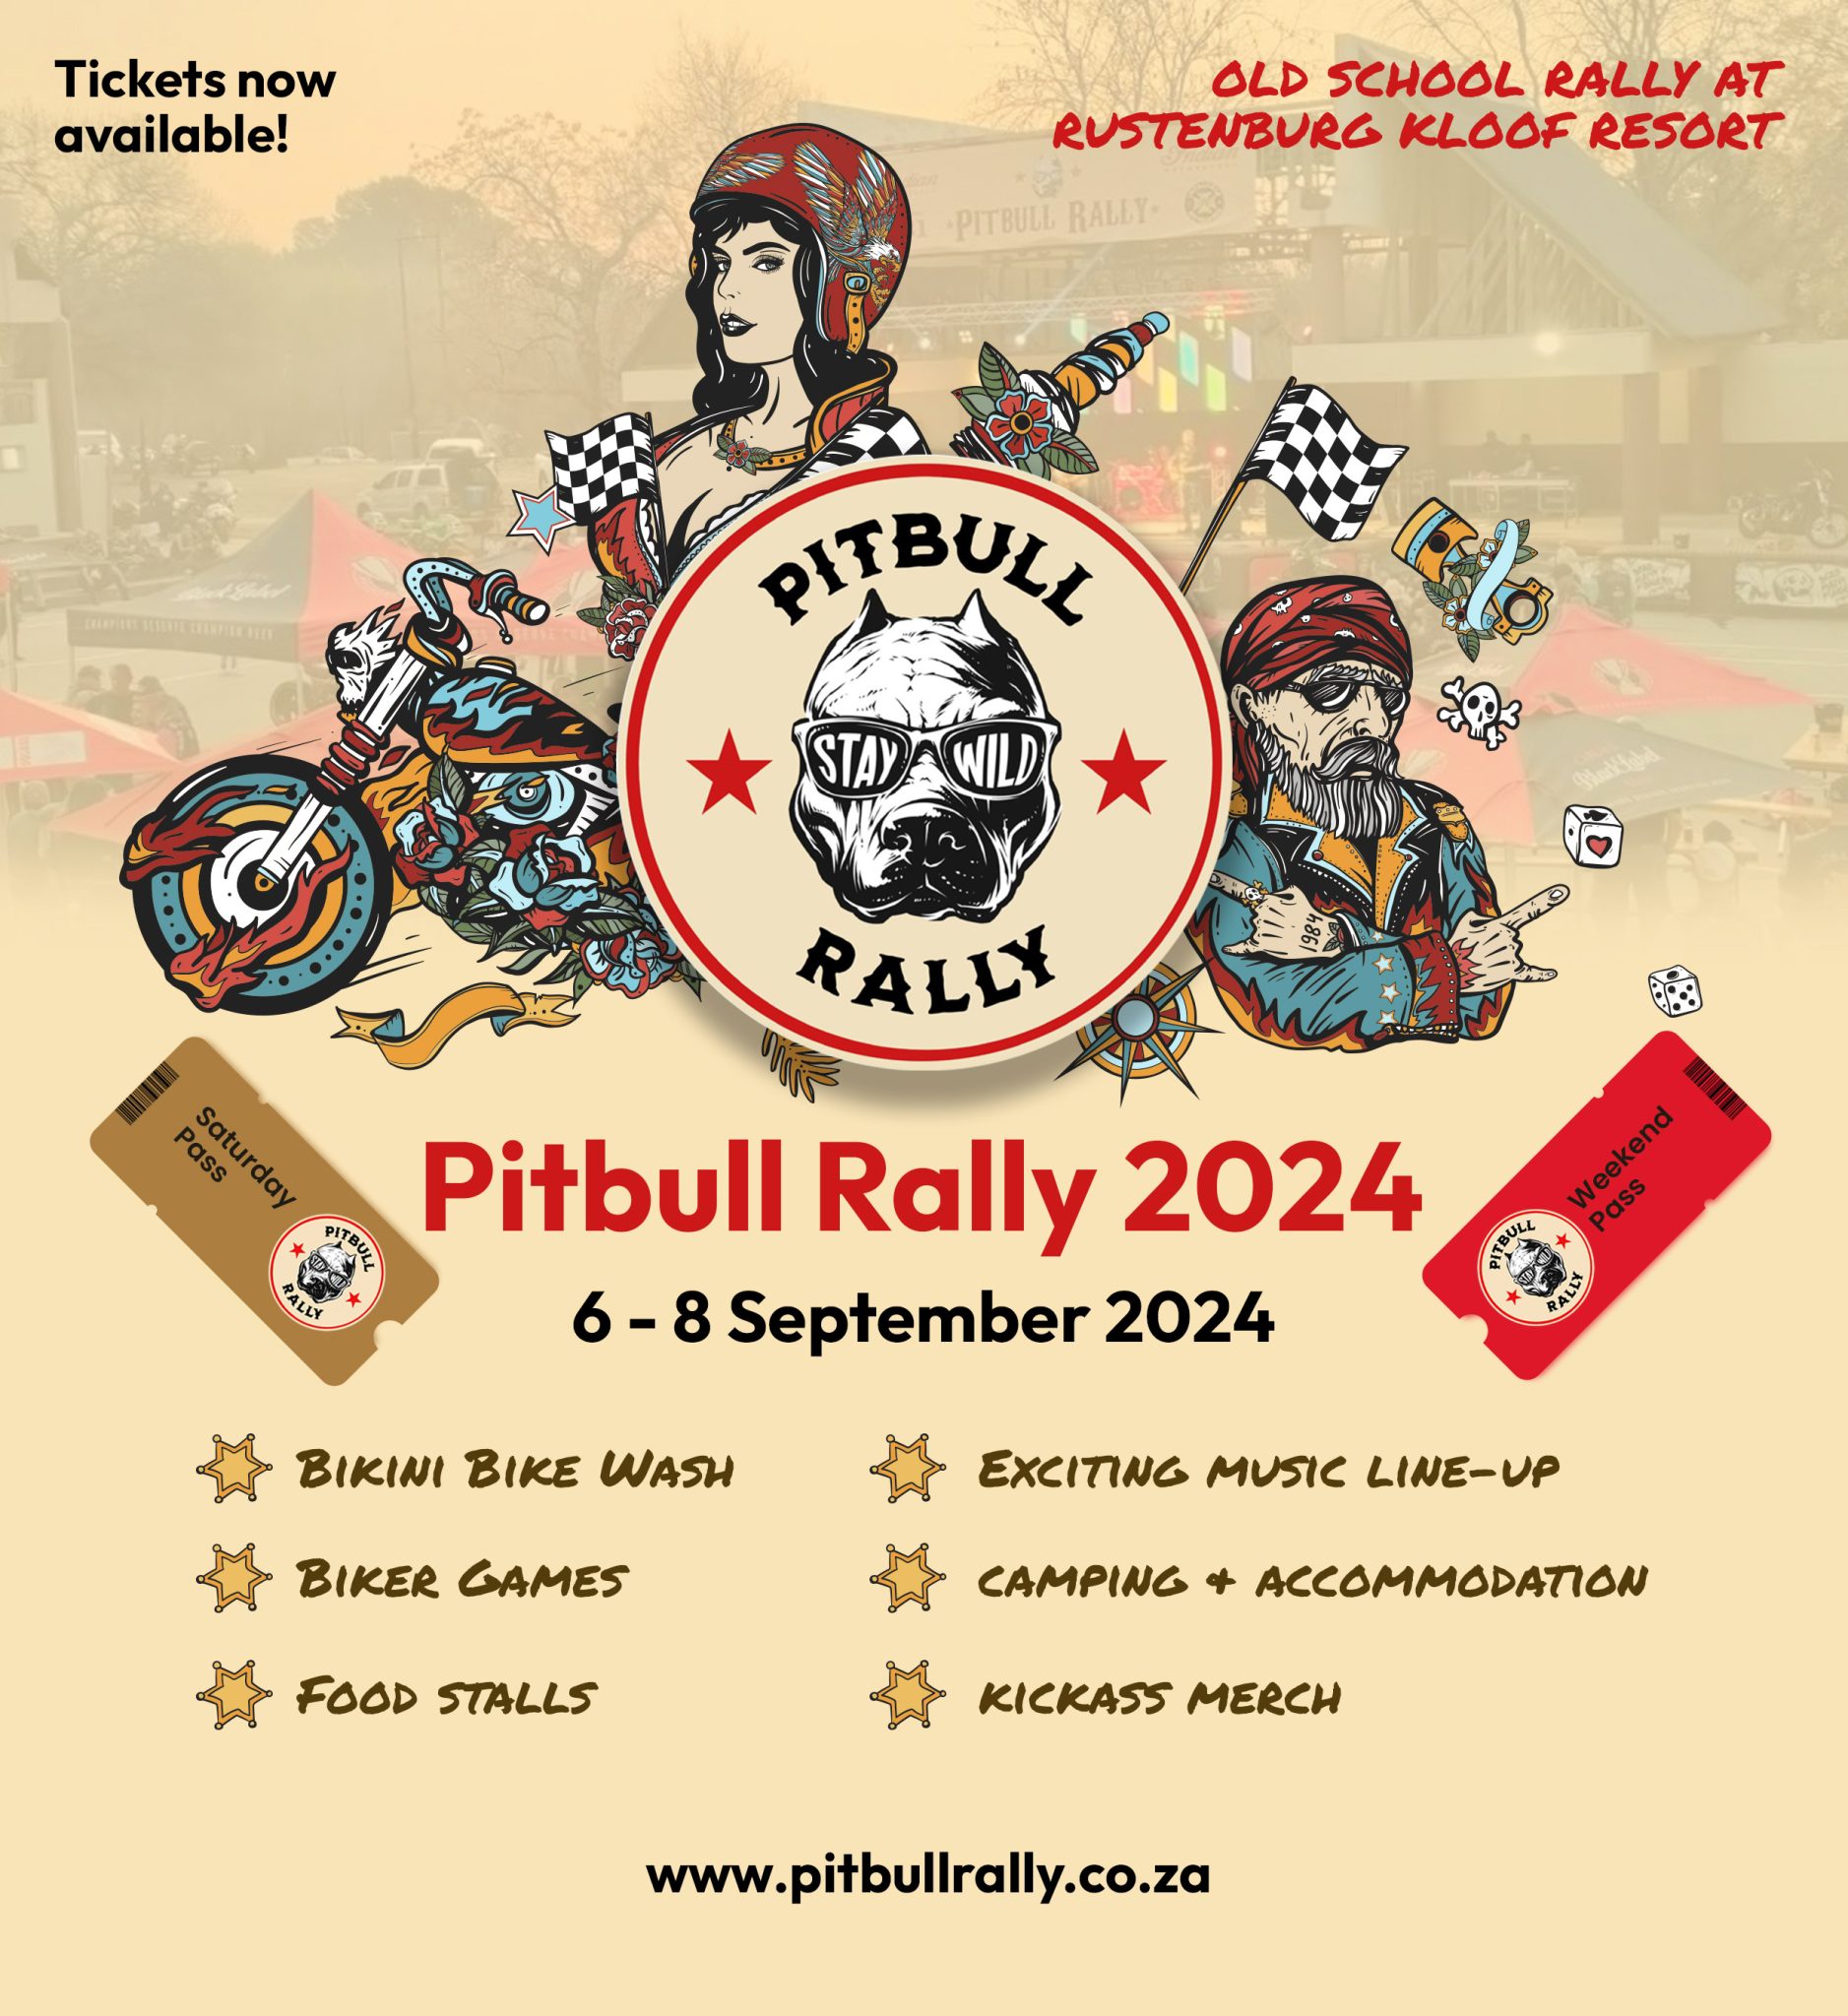 Pitbull Rally OLD SCHOOL RALLY